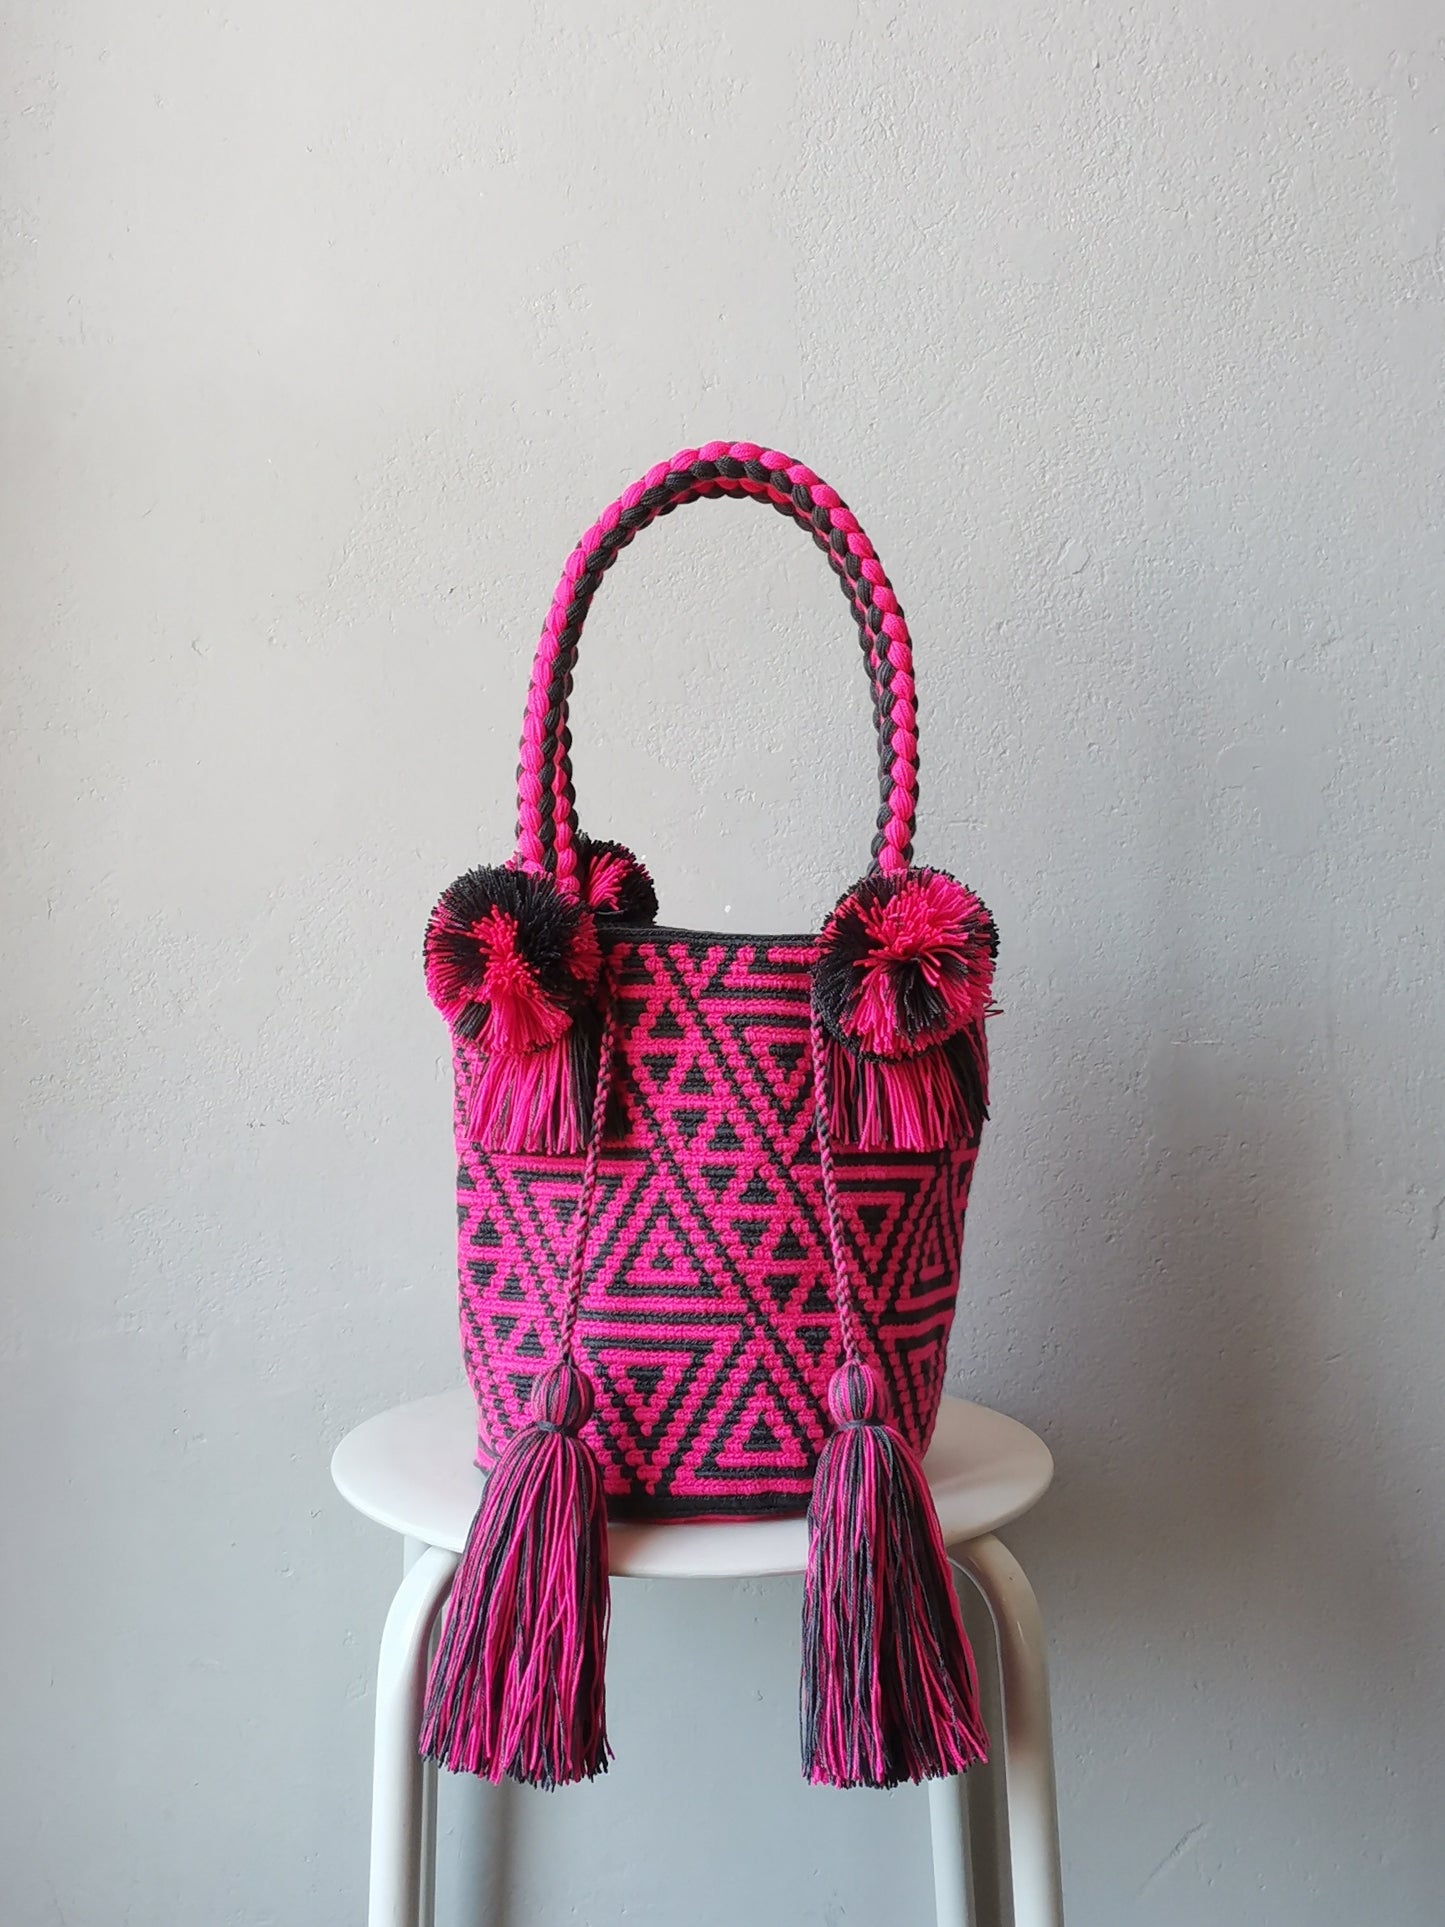 END OF SERIES - M dark gray and bright pink mochila handbag